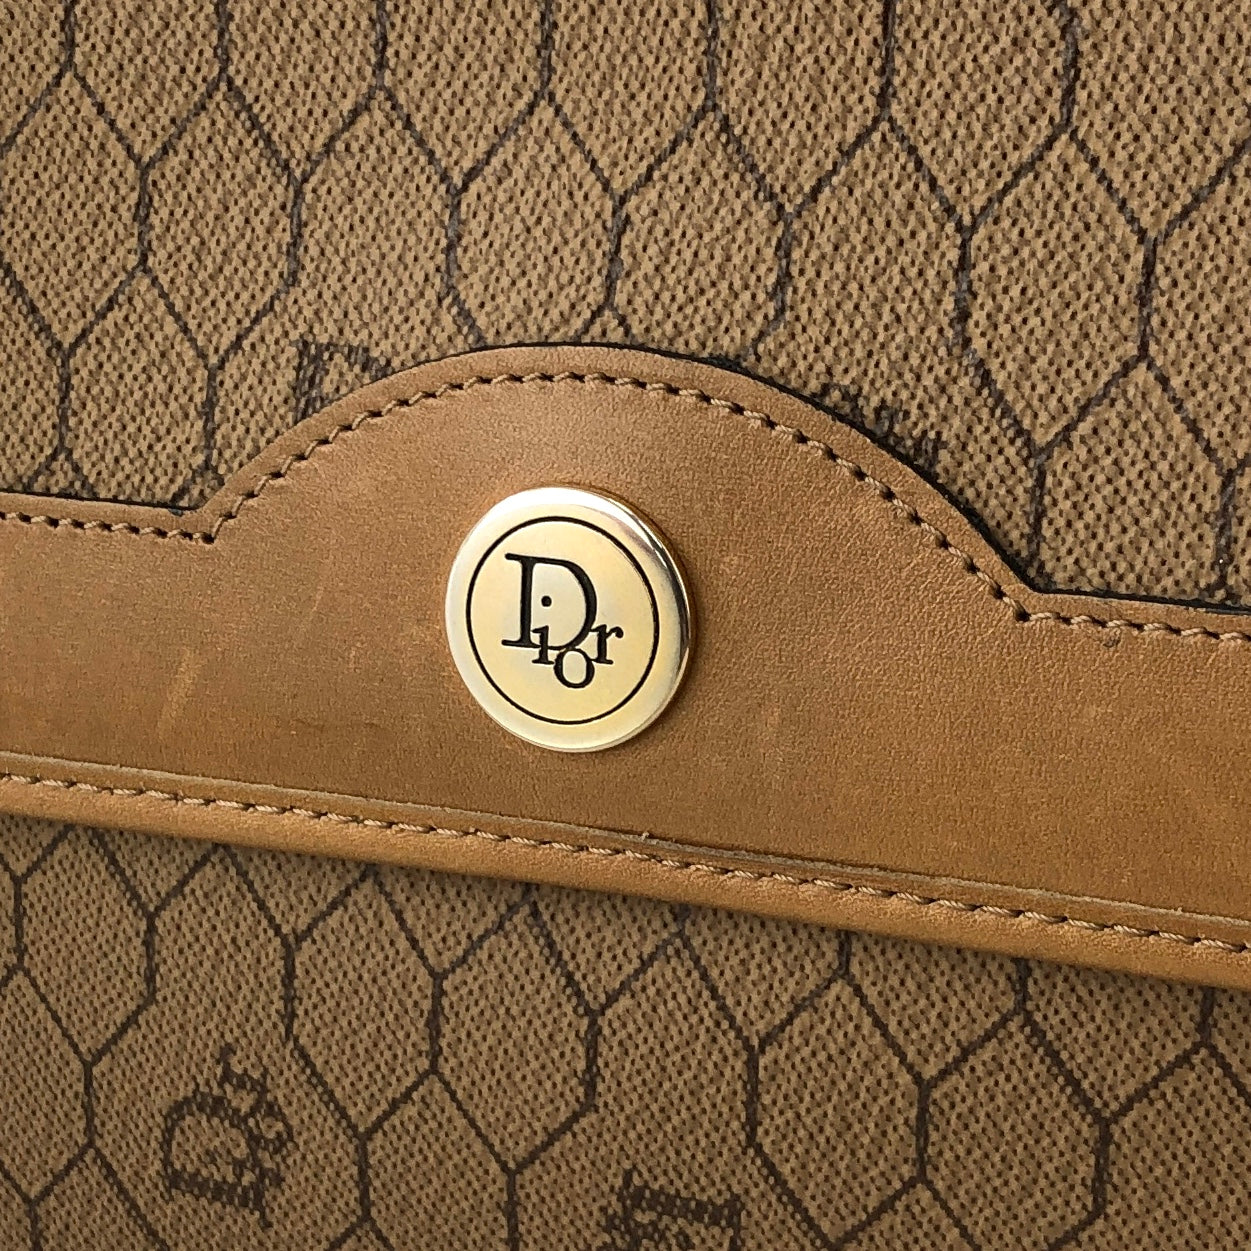 Christian Dior shoulder bag white leather honeycomb pattern